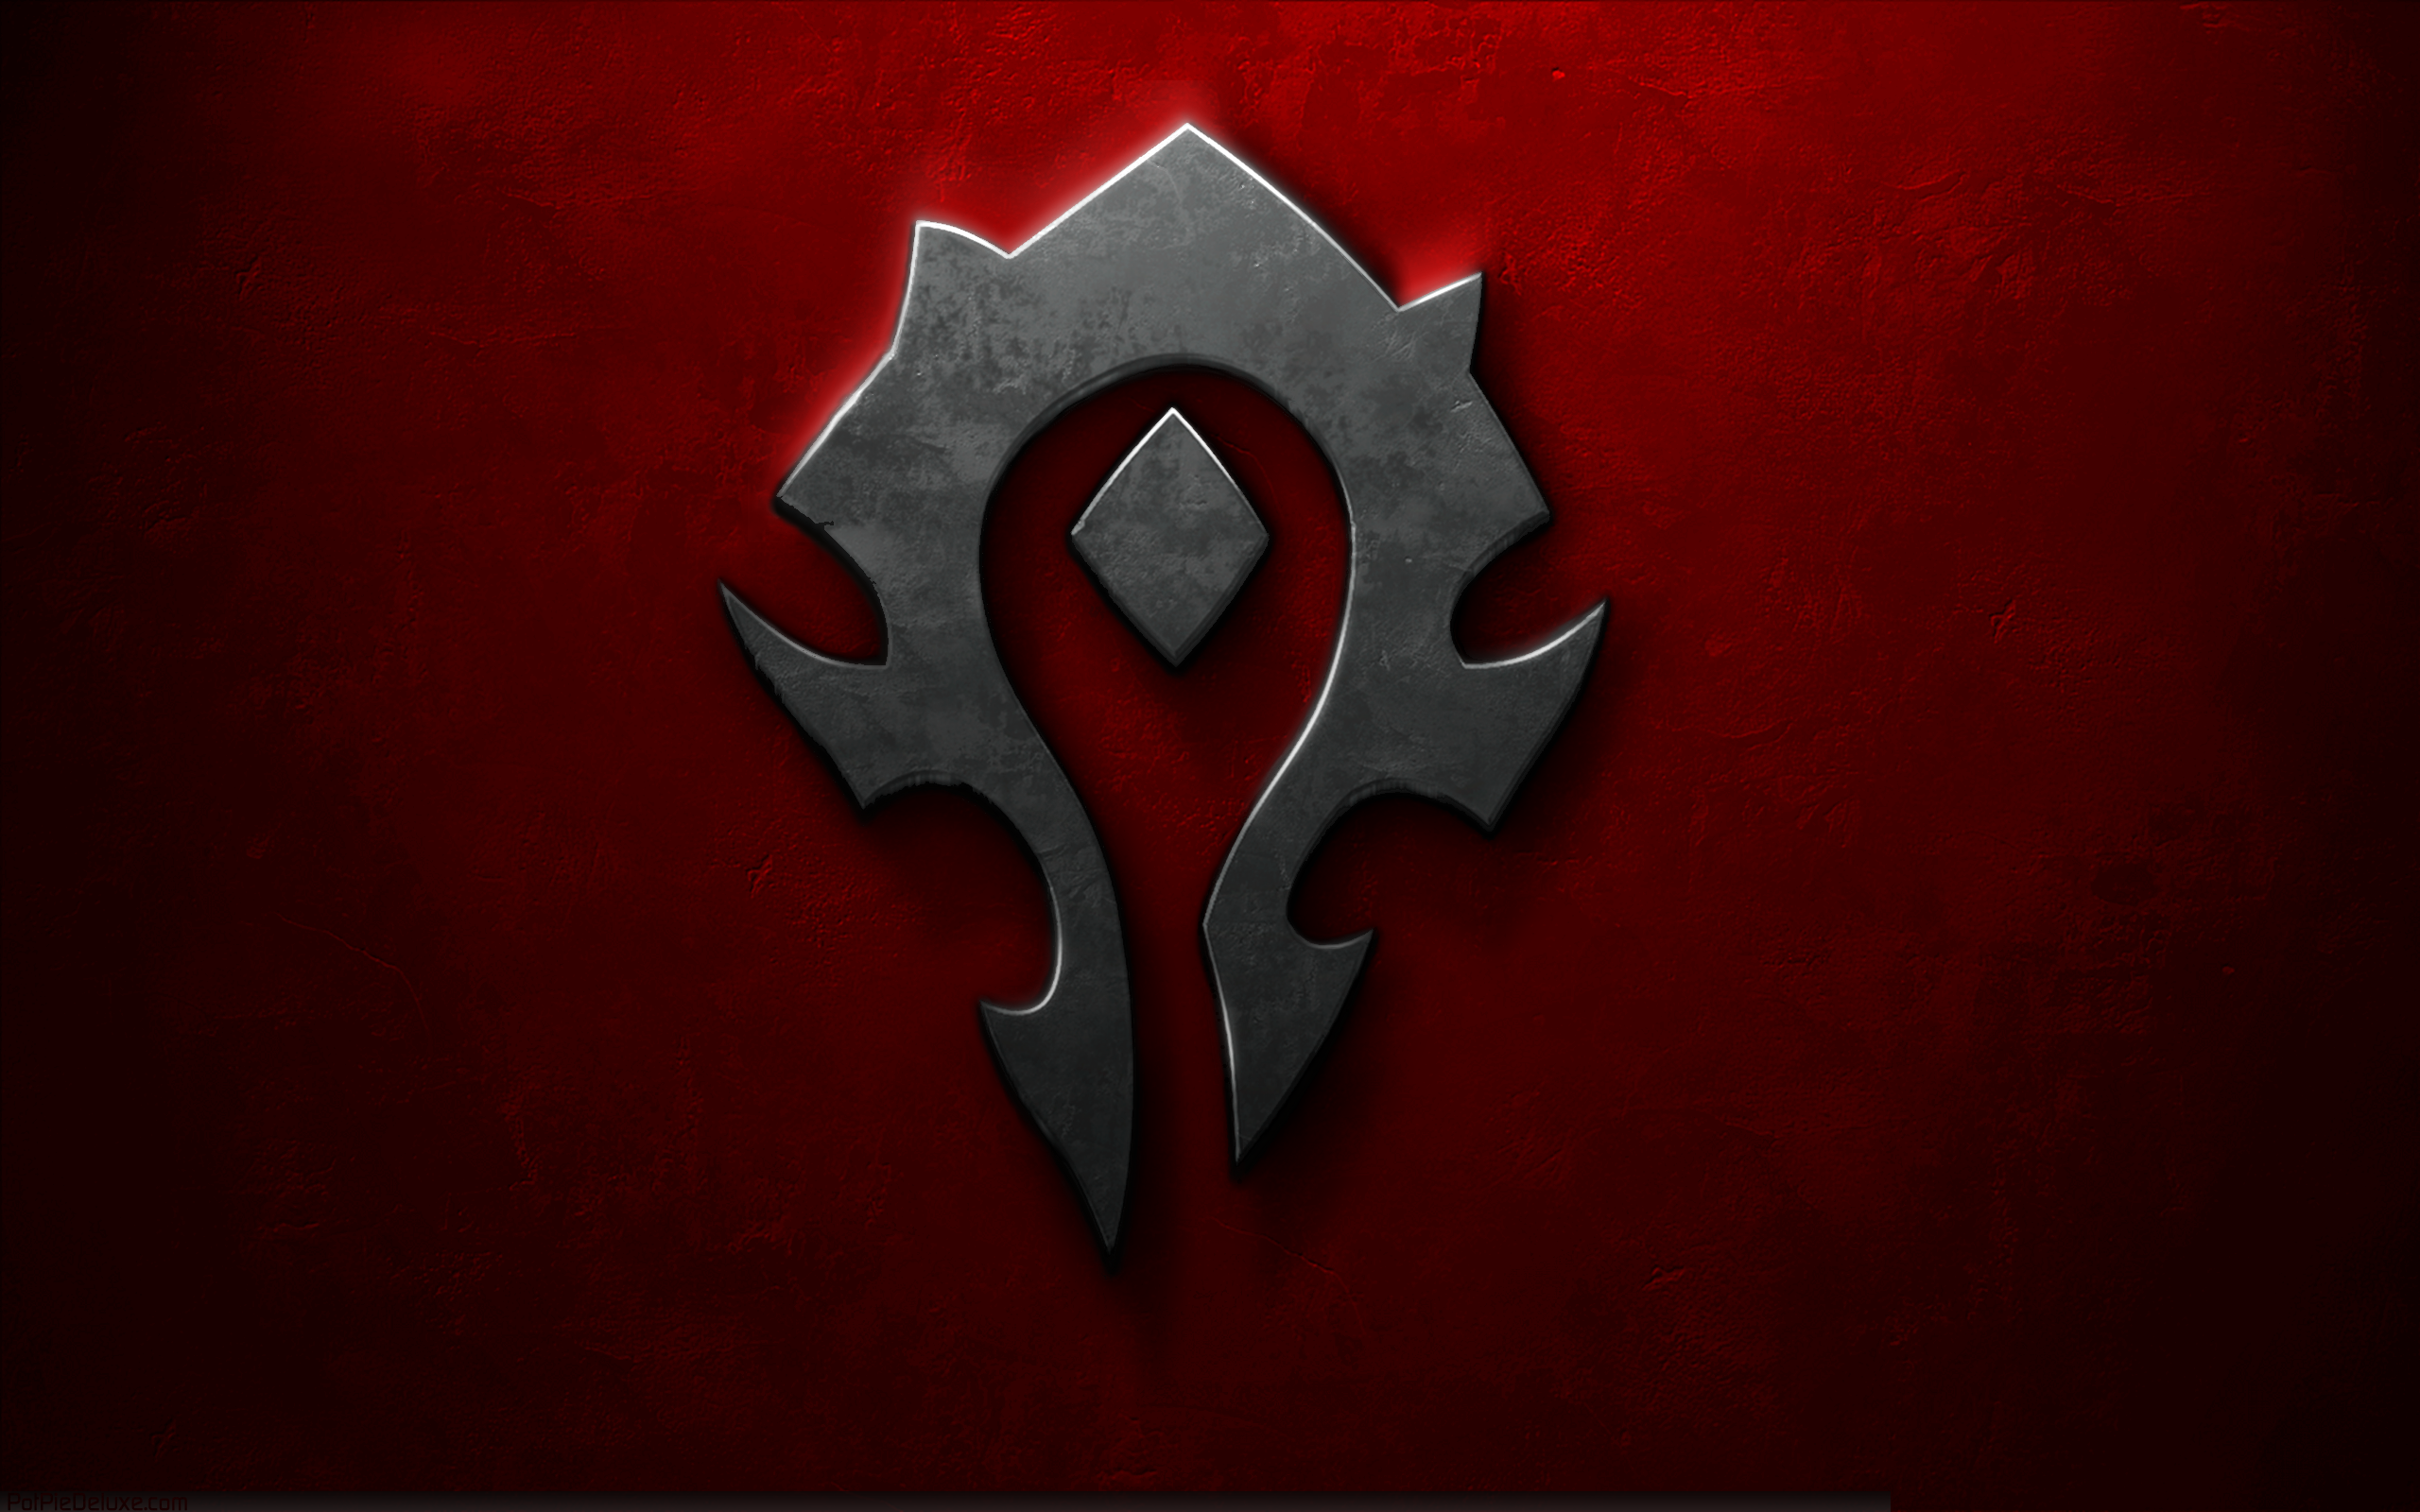 World Of Warcraft Puter Wallpaper Desktop Background